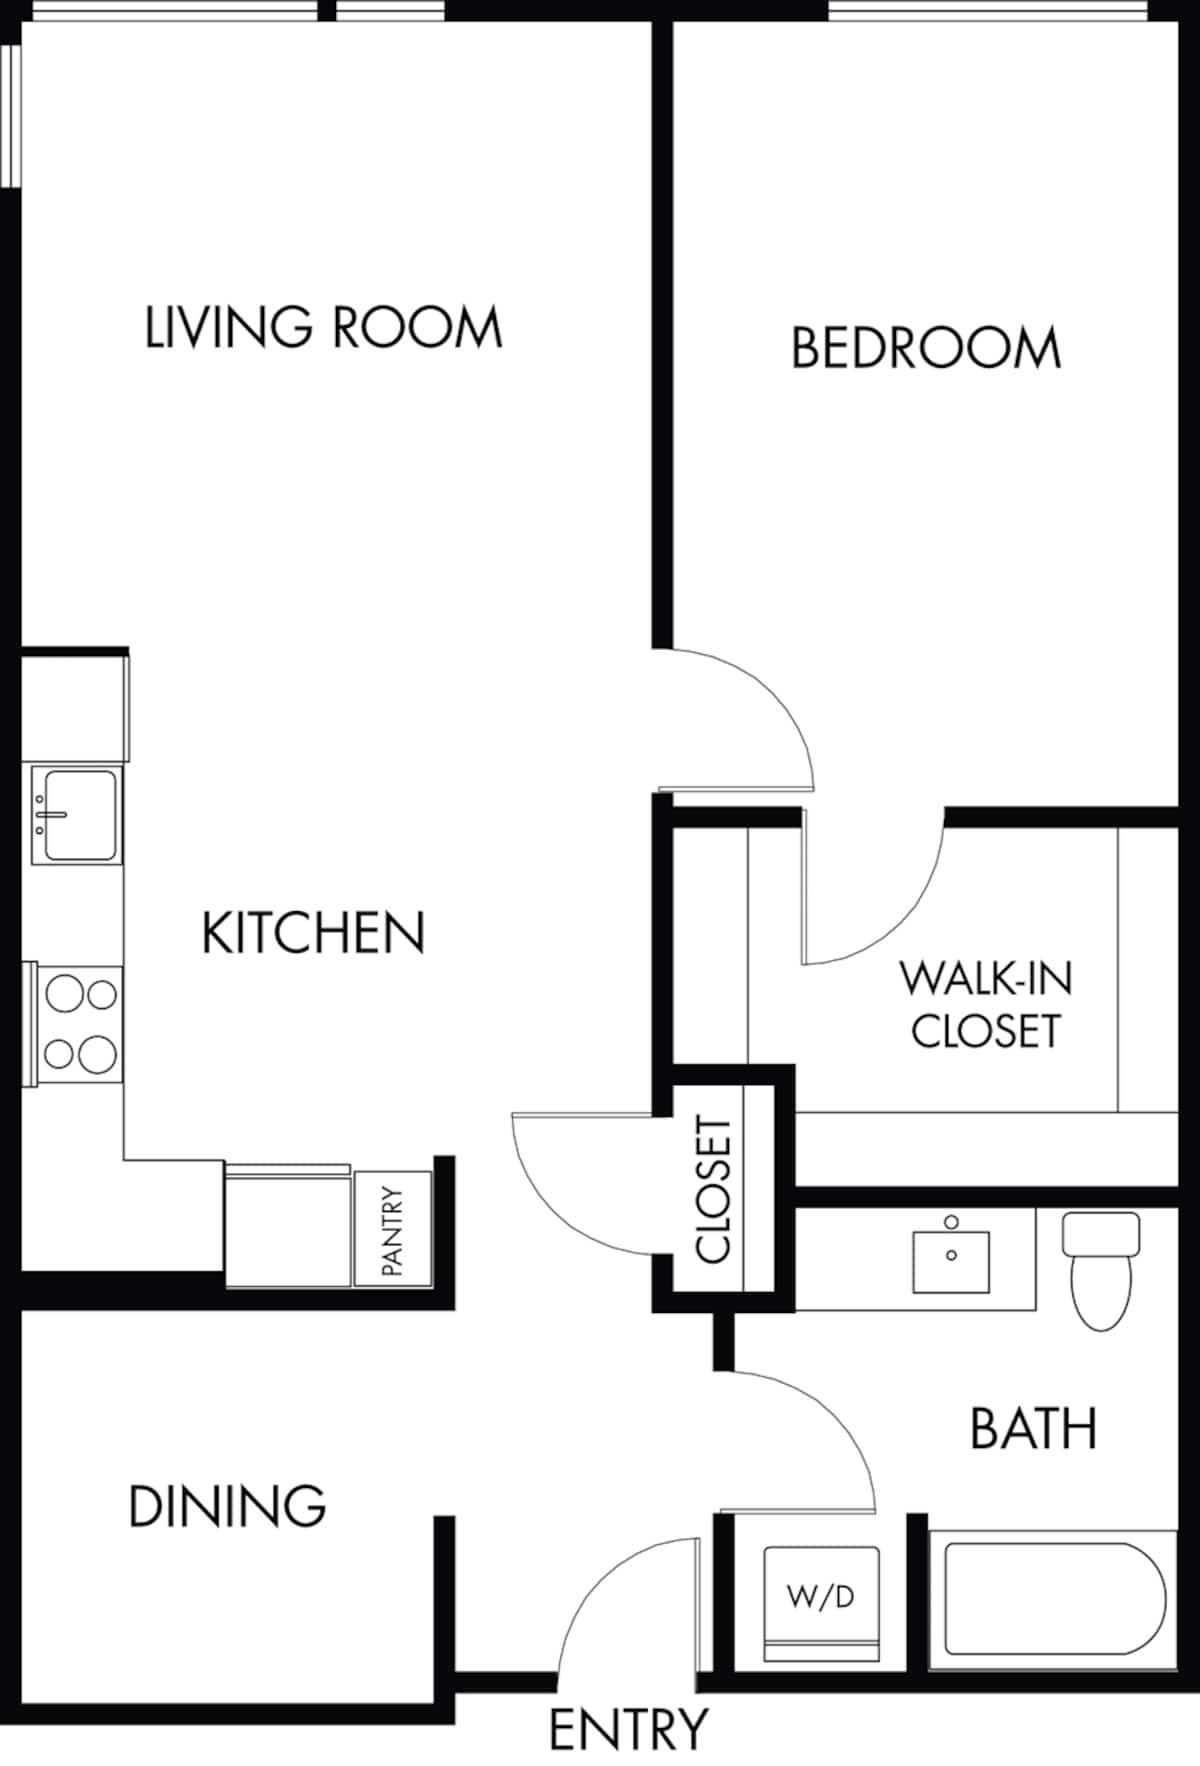 Floorplan diagram for 1.2 Type A, showing 1 bedroom